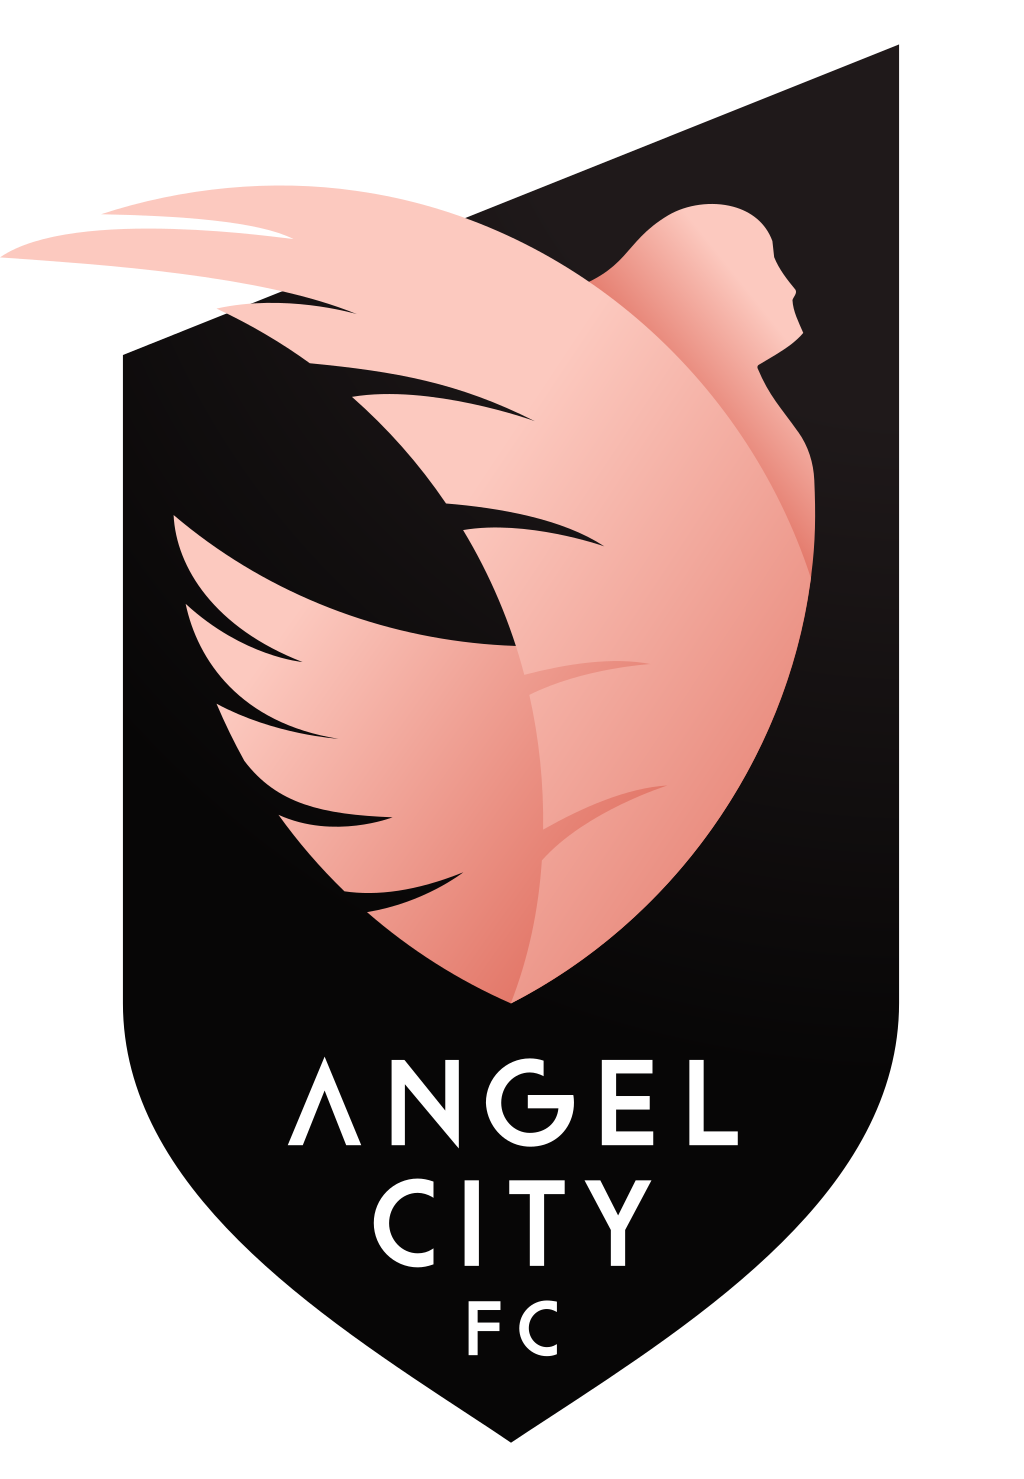 Angel_City_FC_logo.svg.png